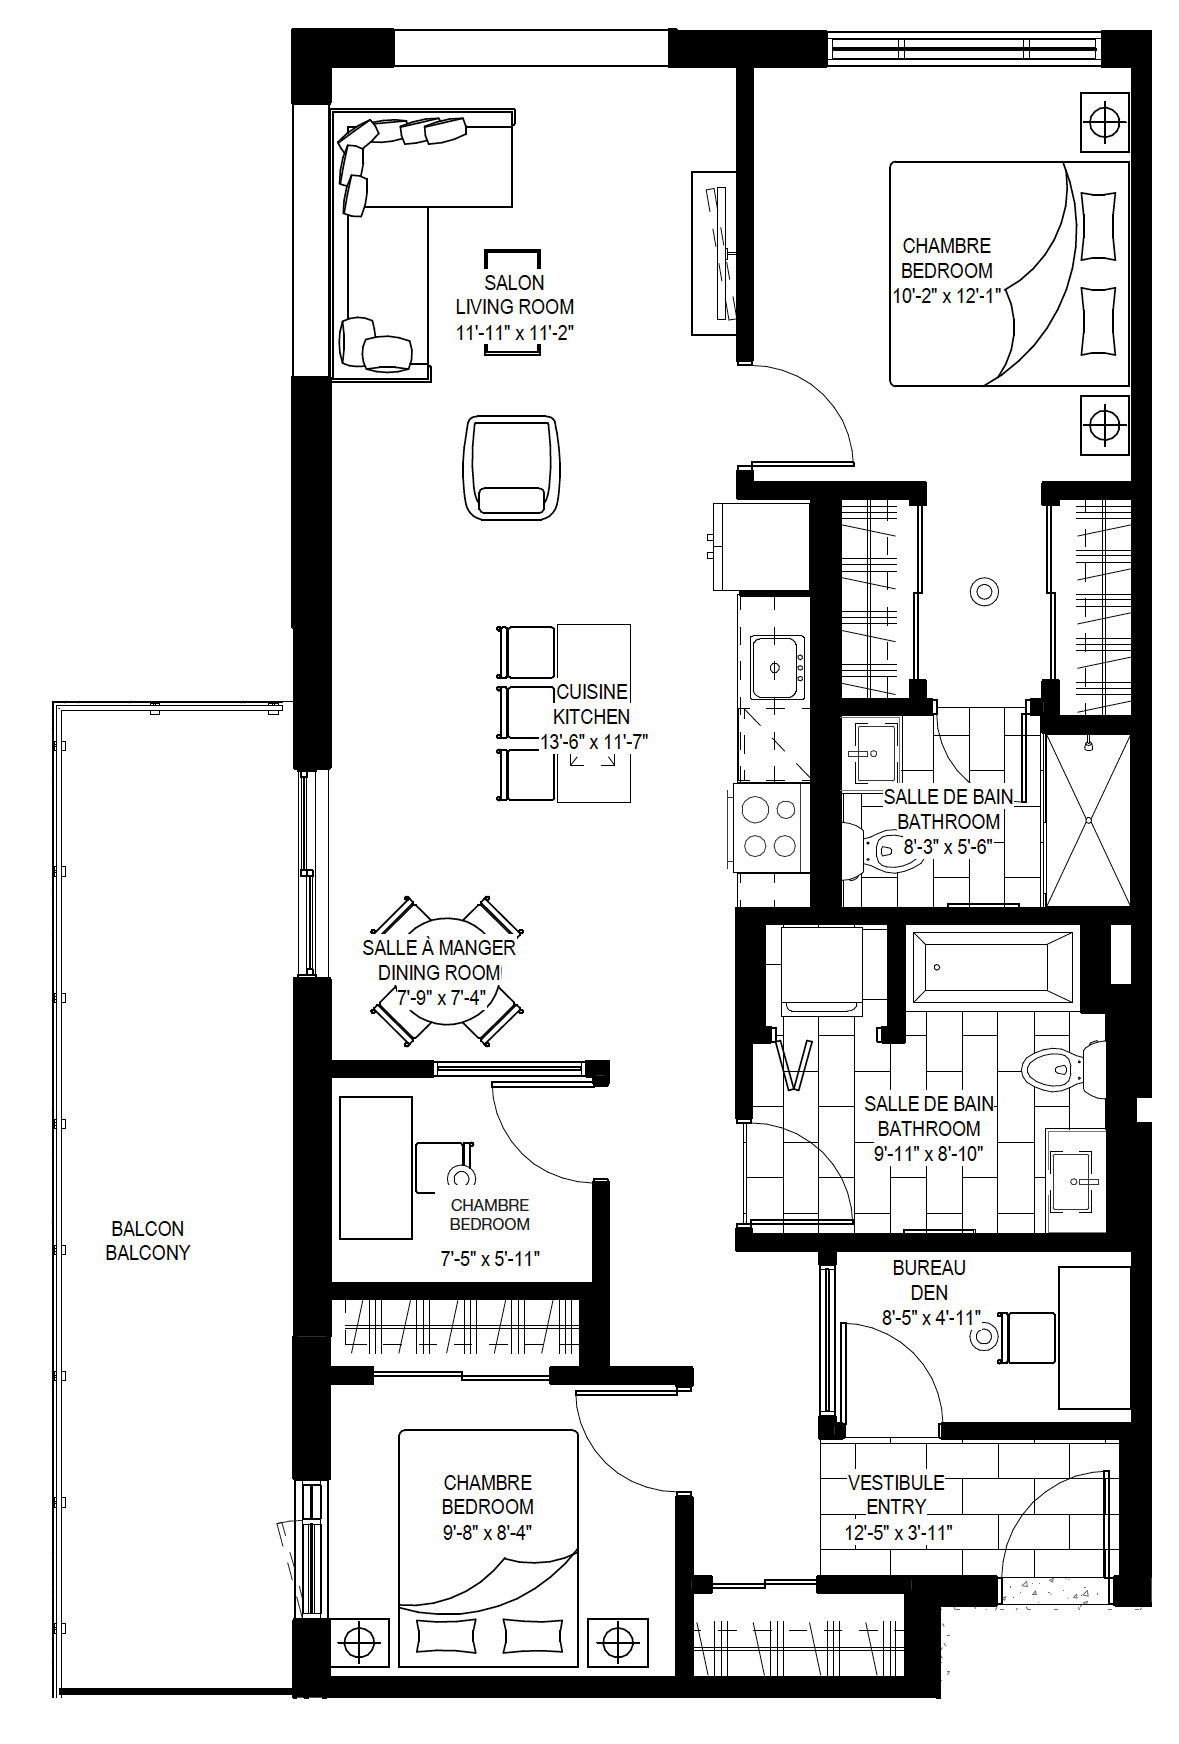 Unit plan - 3-bedroom